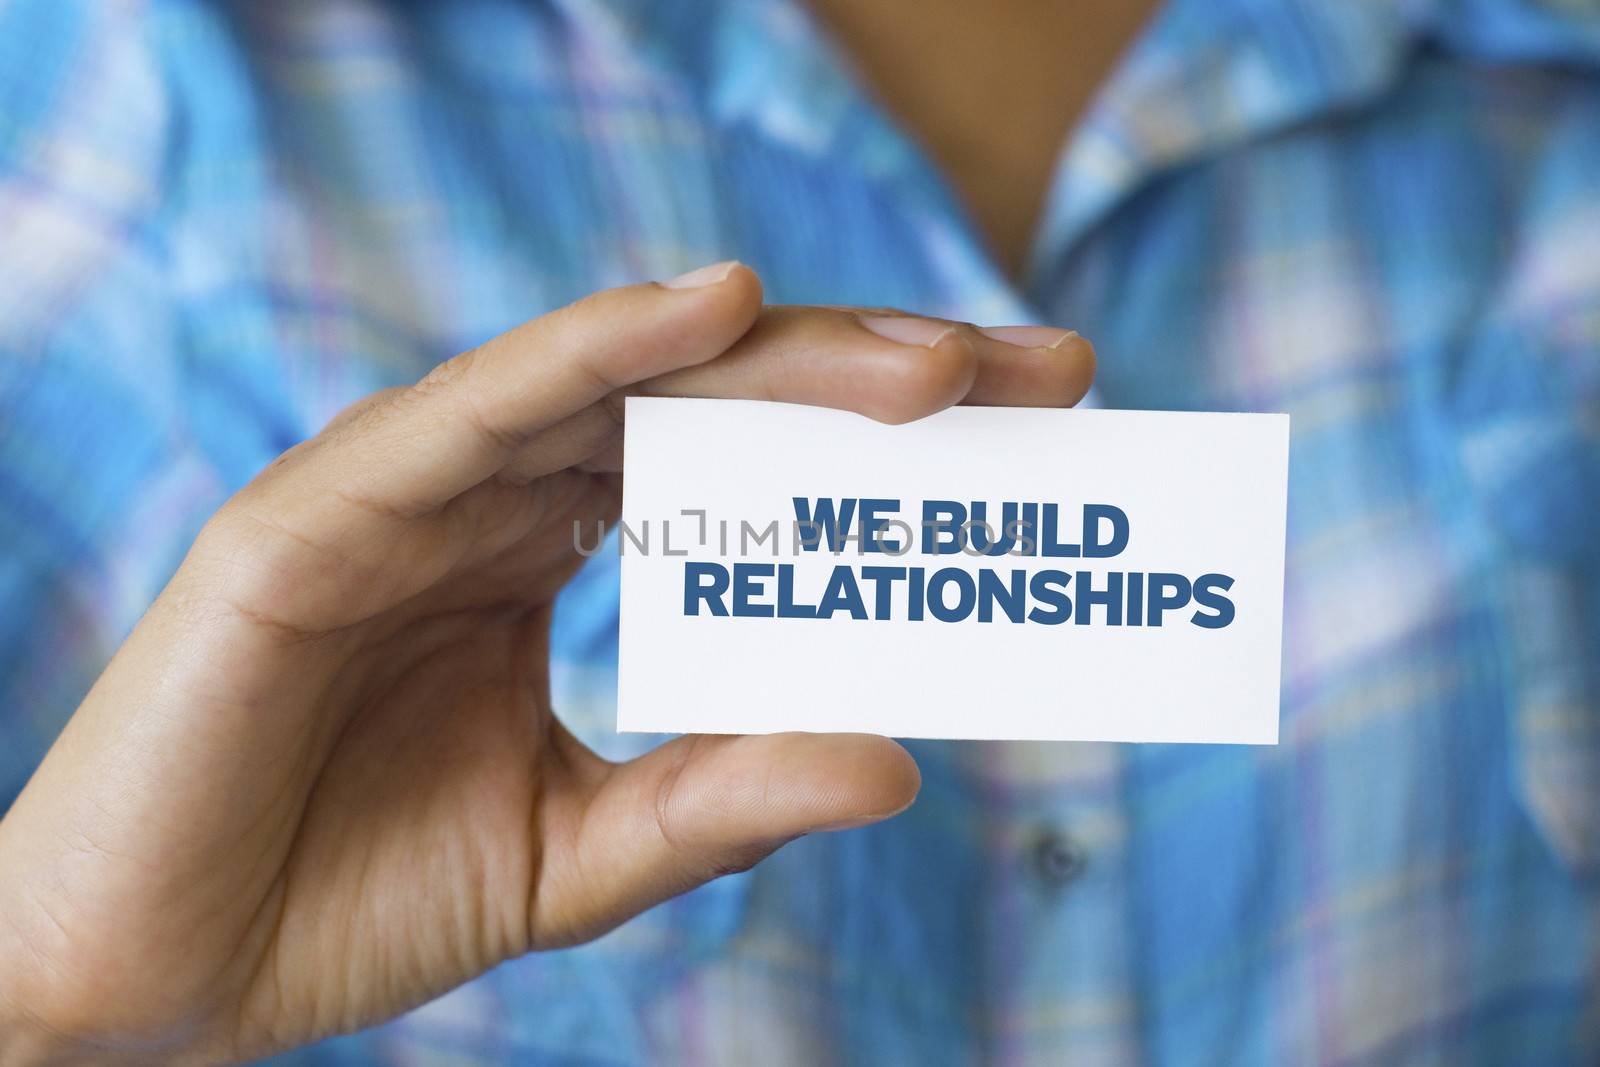 We build Relationships by kbuntu